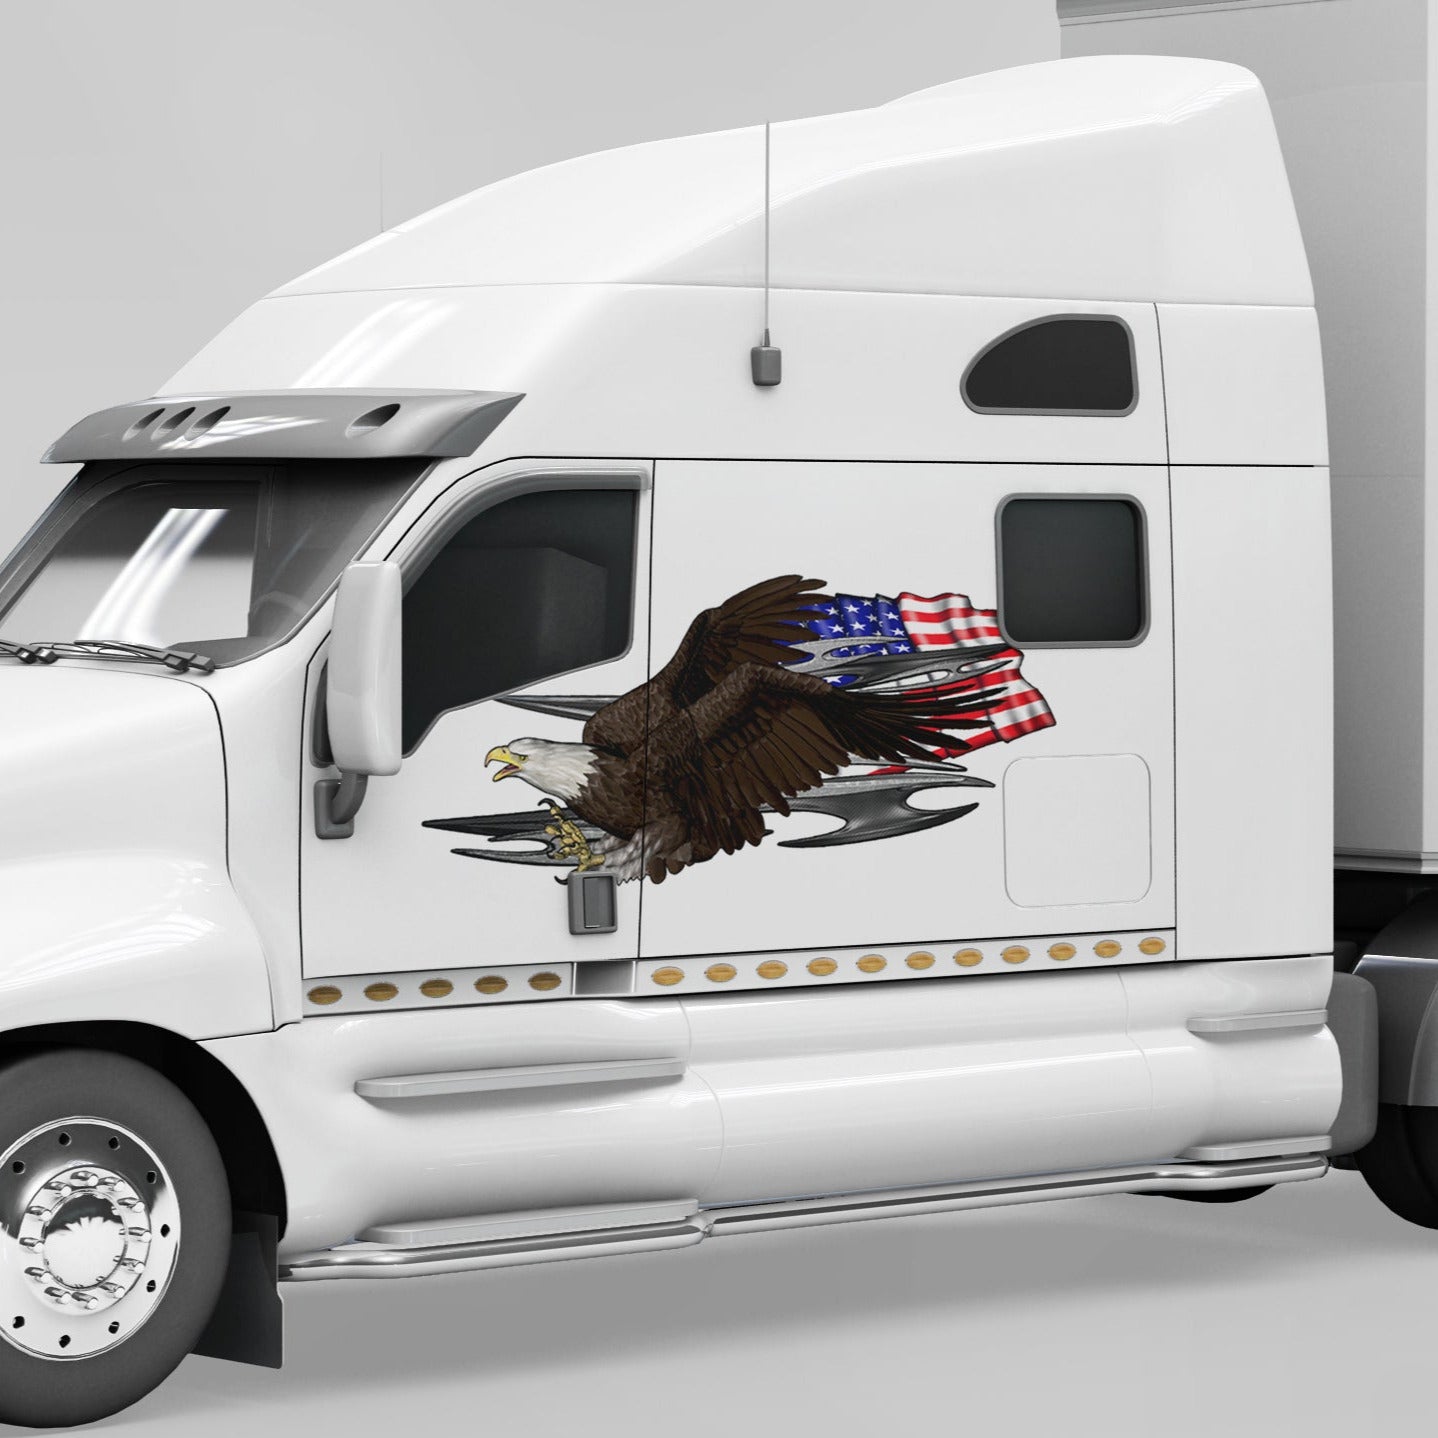 American eagle strike graphics on semi truck